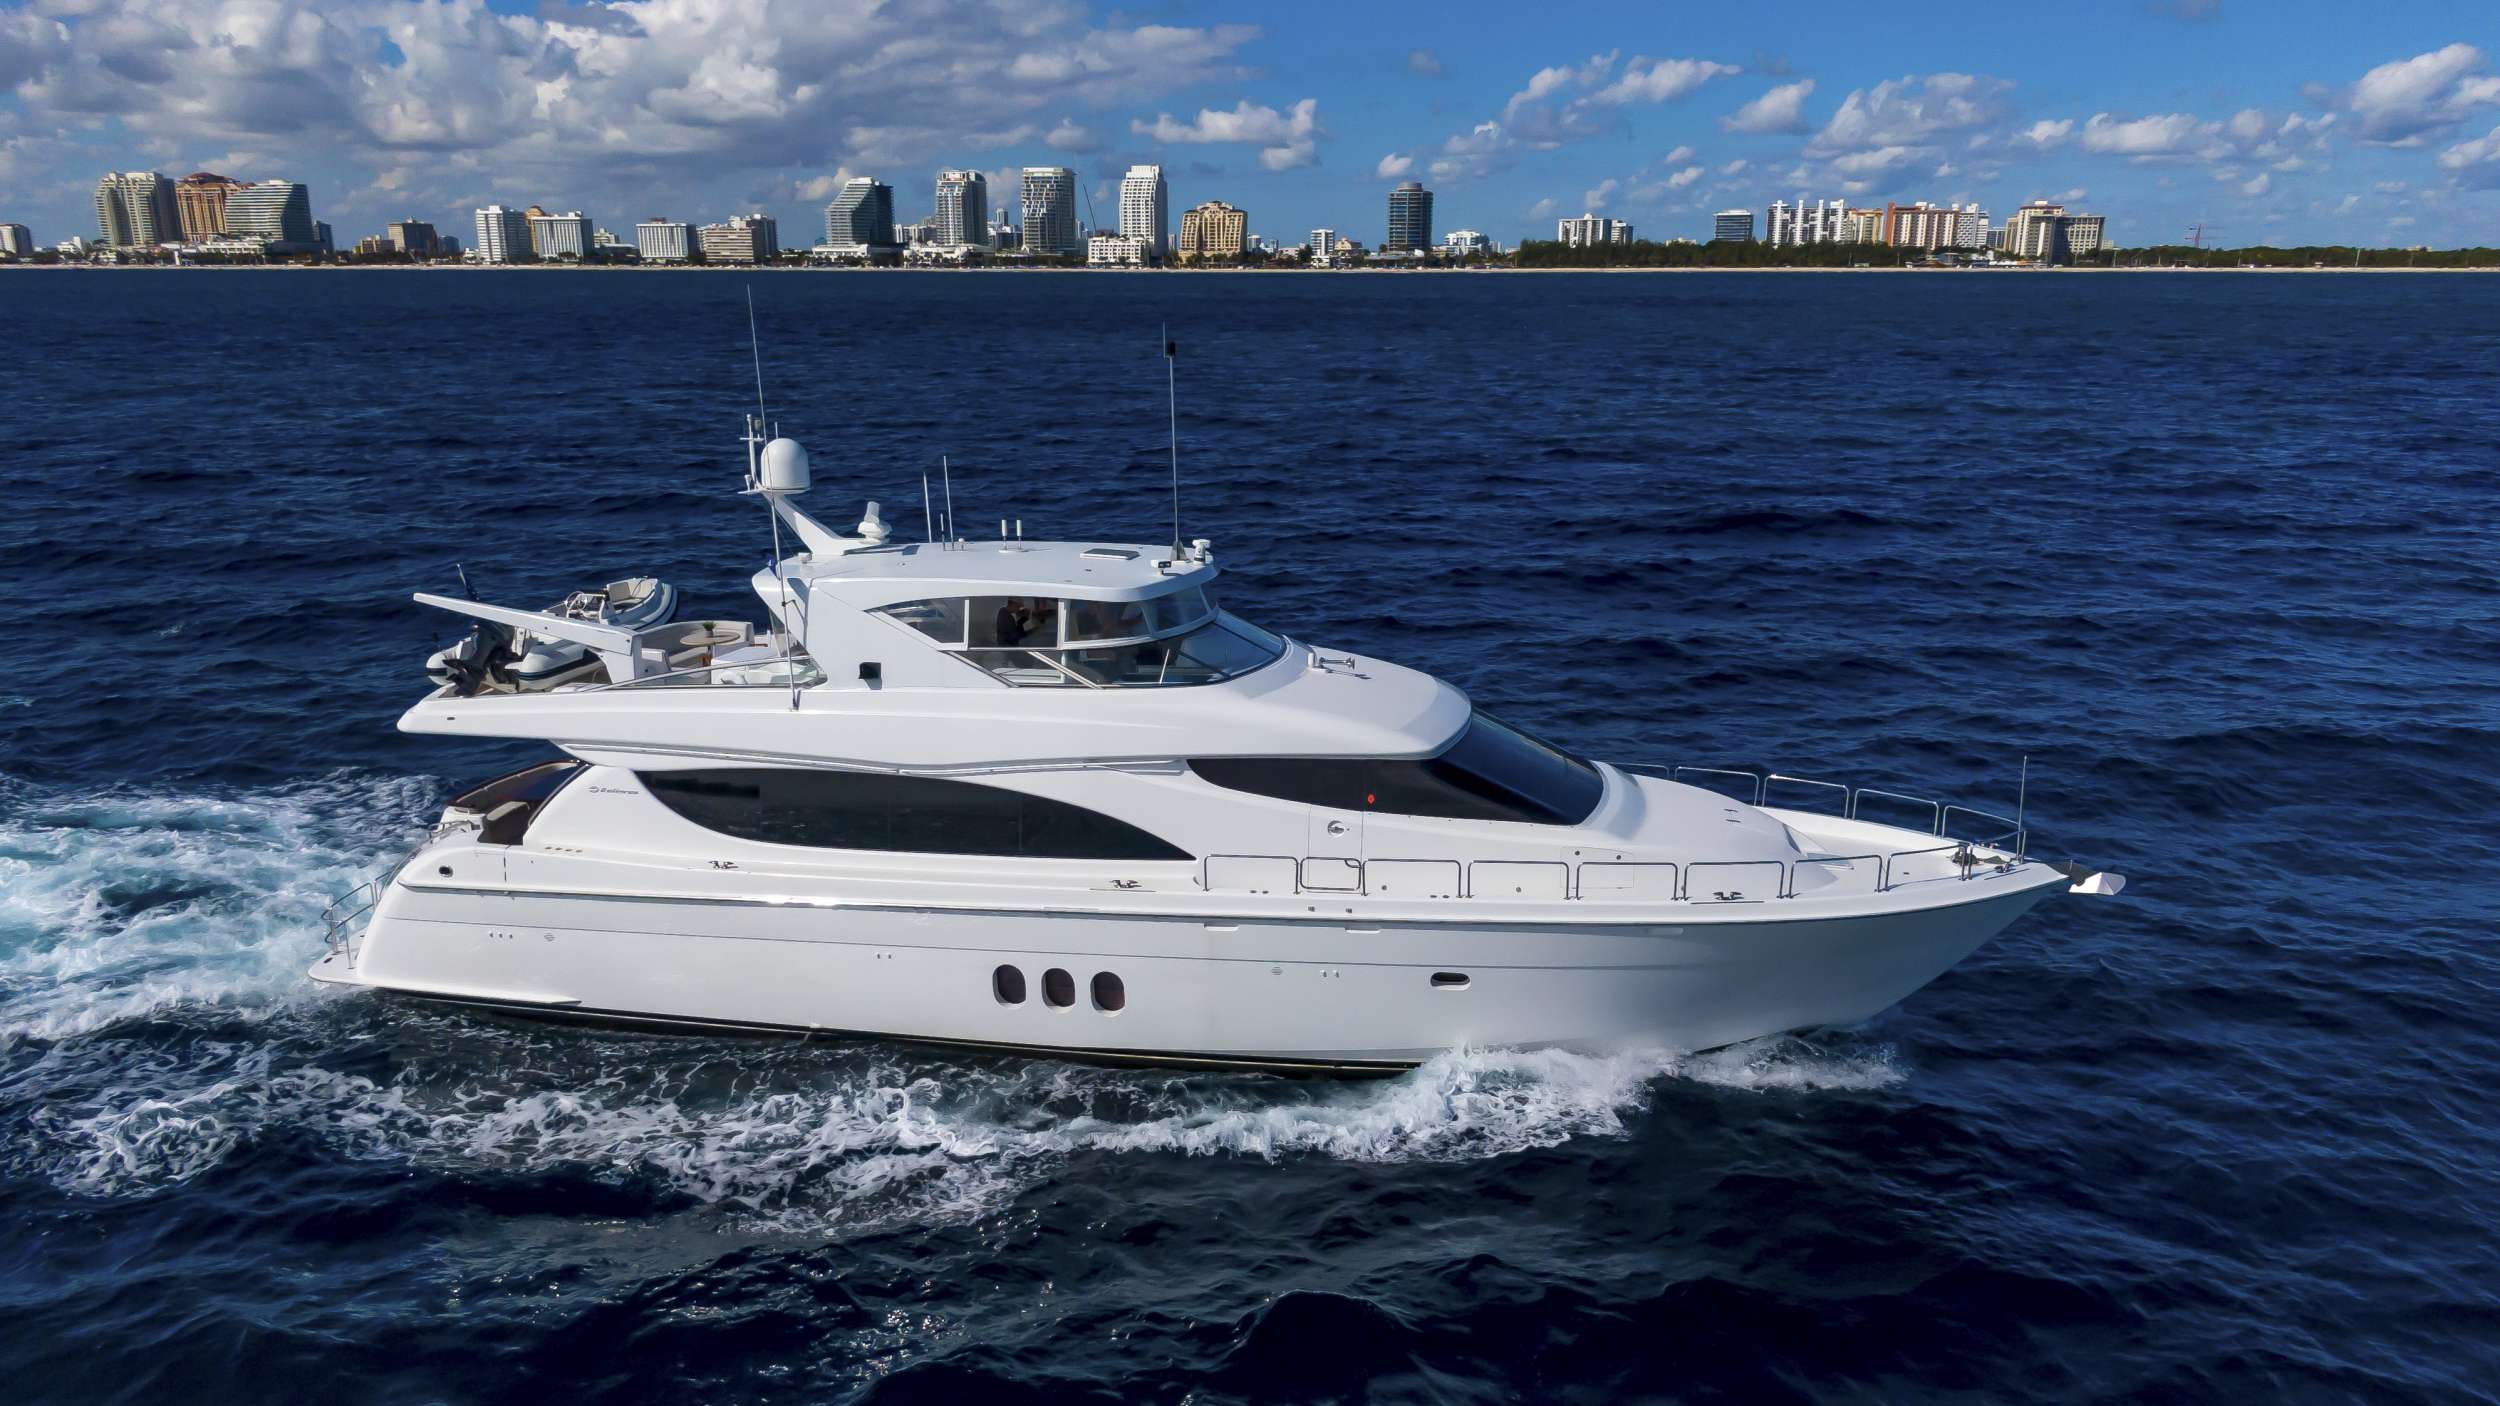 GALLOPIN - Yacht Charter Newport & Boat hire in US East Coast & Bahamas 1